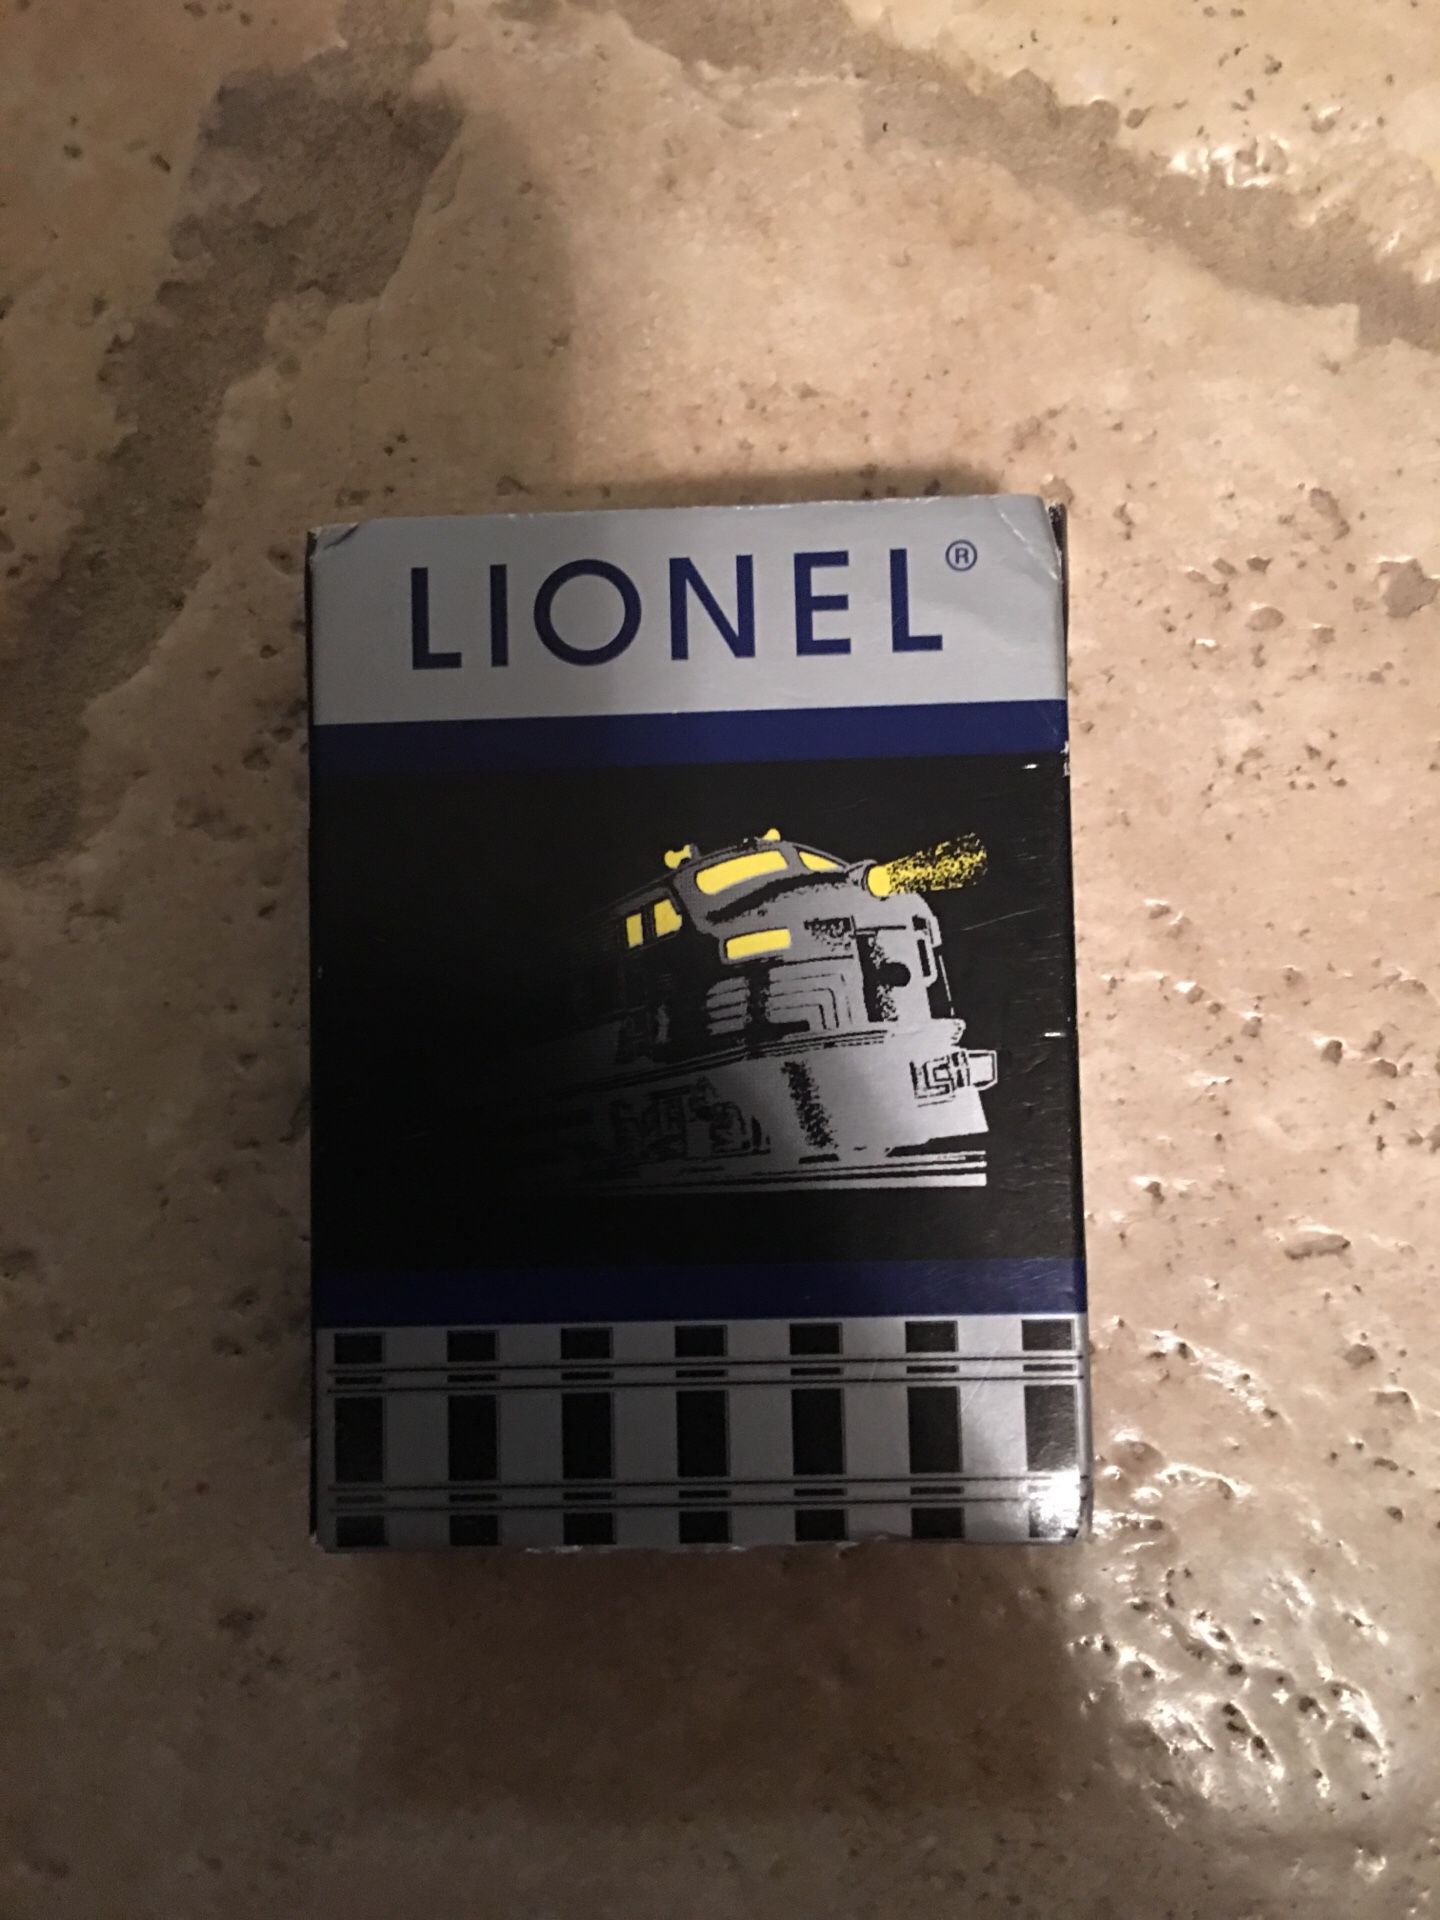 Lionel zippo lighter